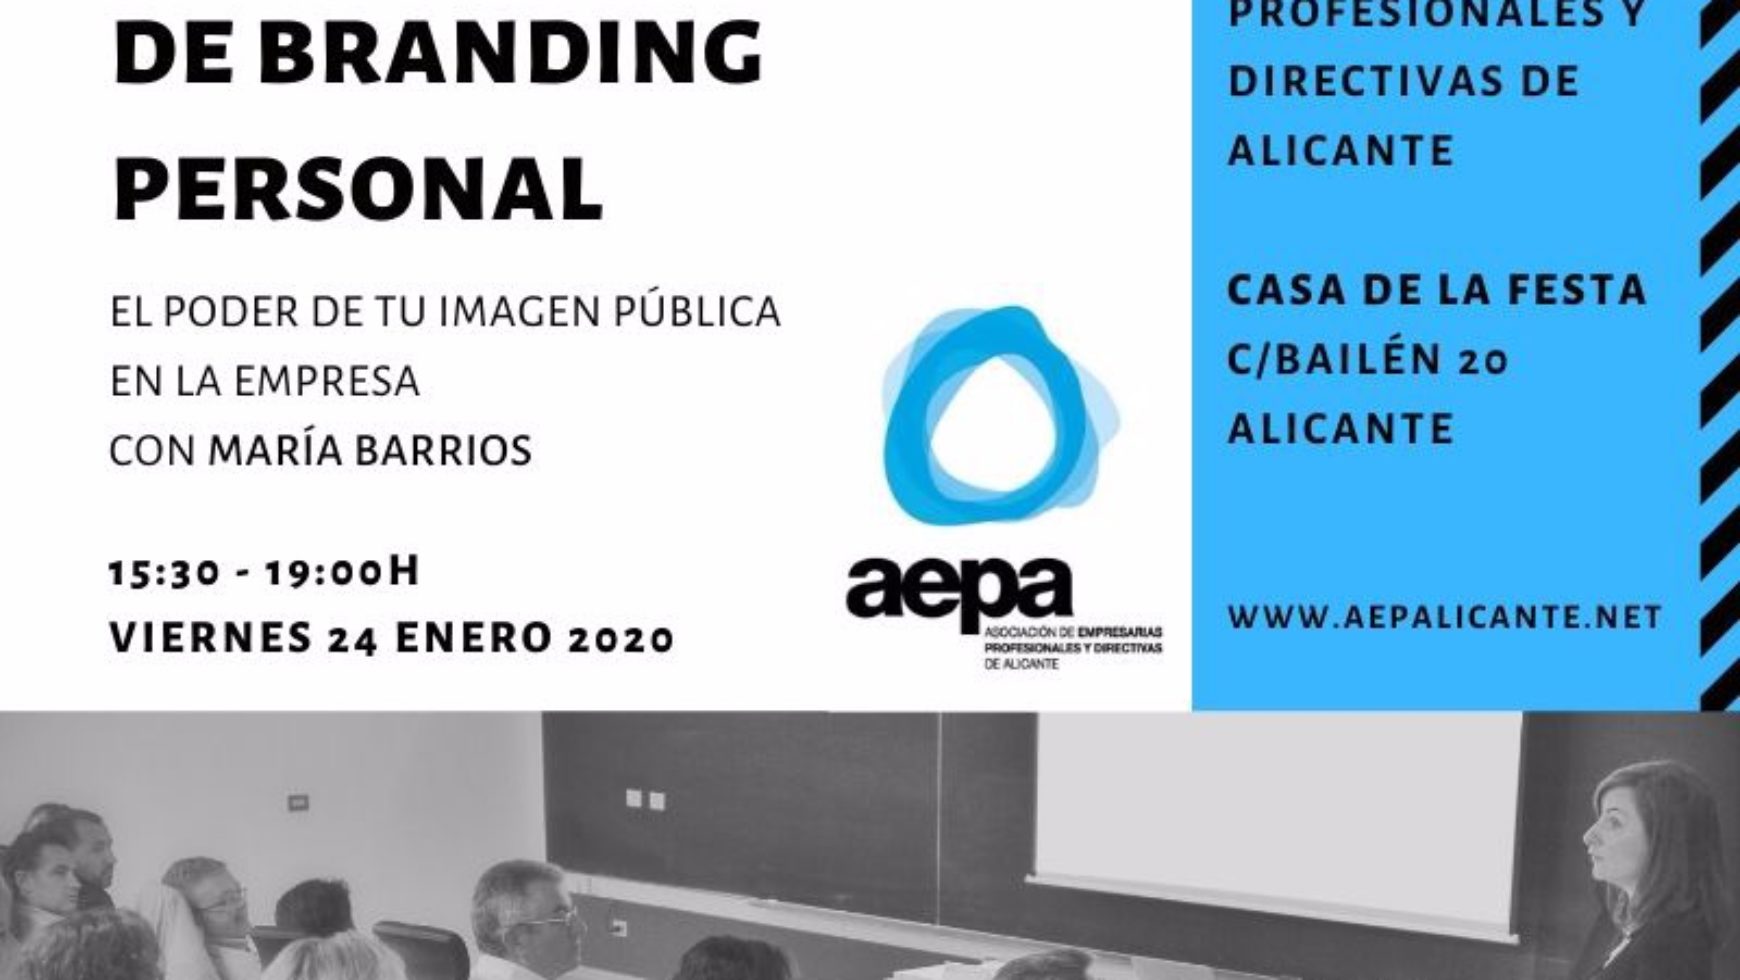 AEPA organiza un curso de Branding Personal para socias.